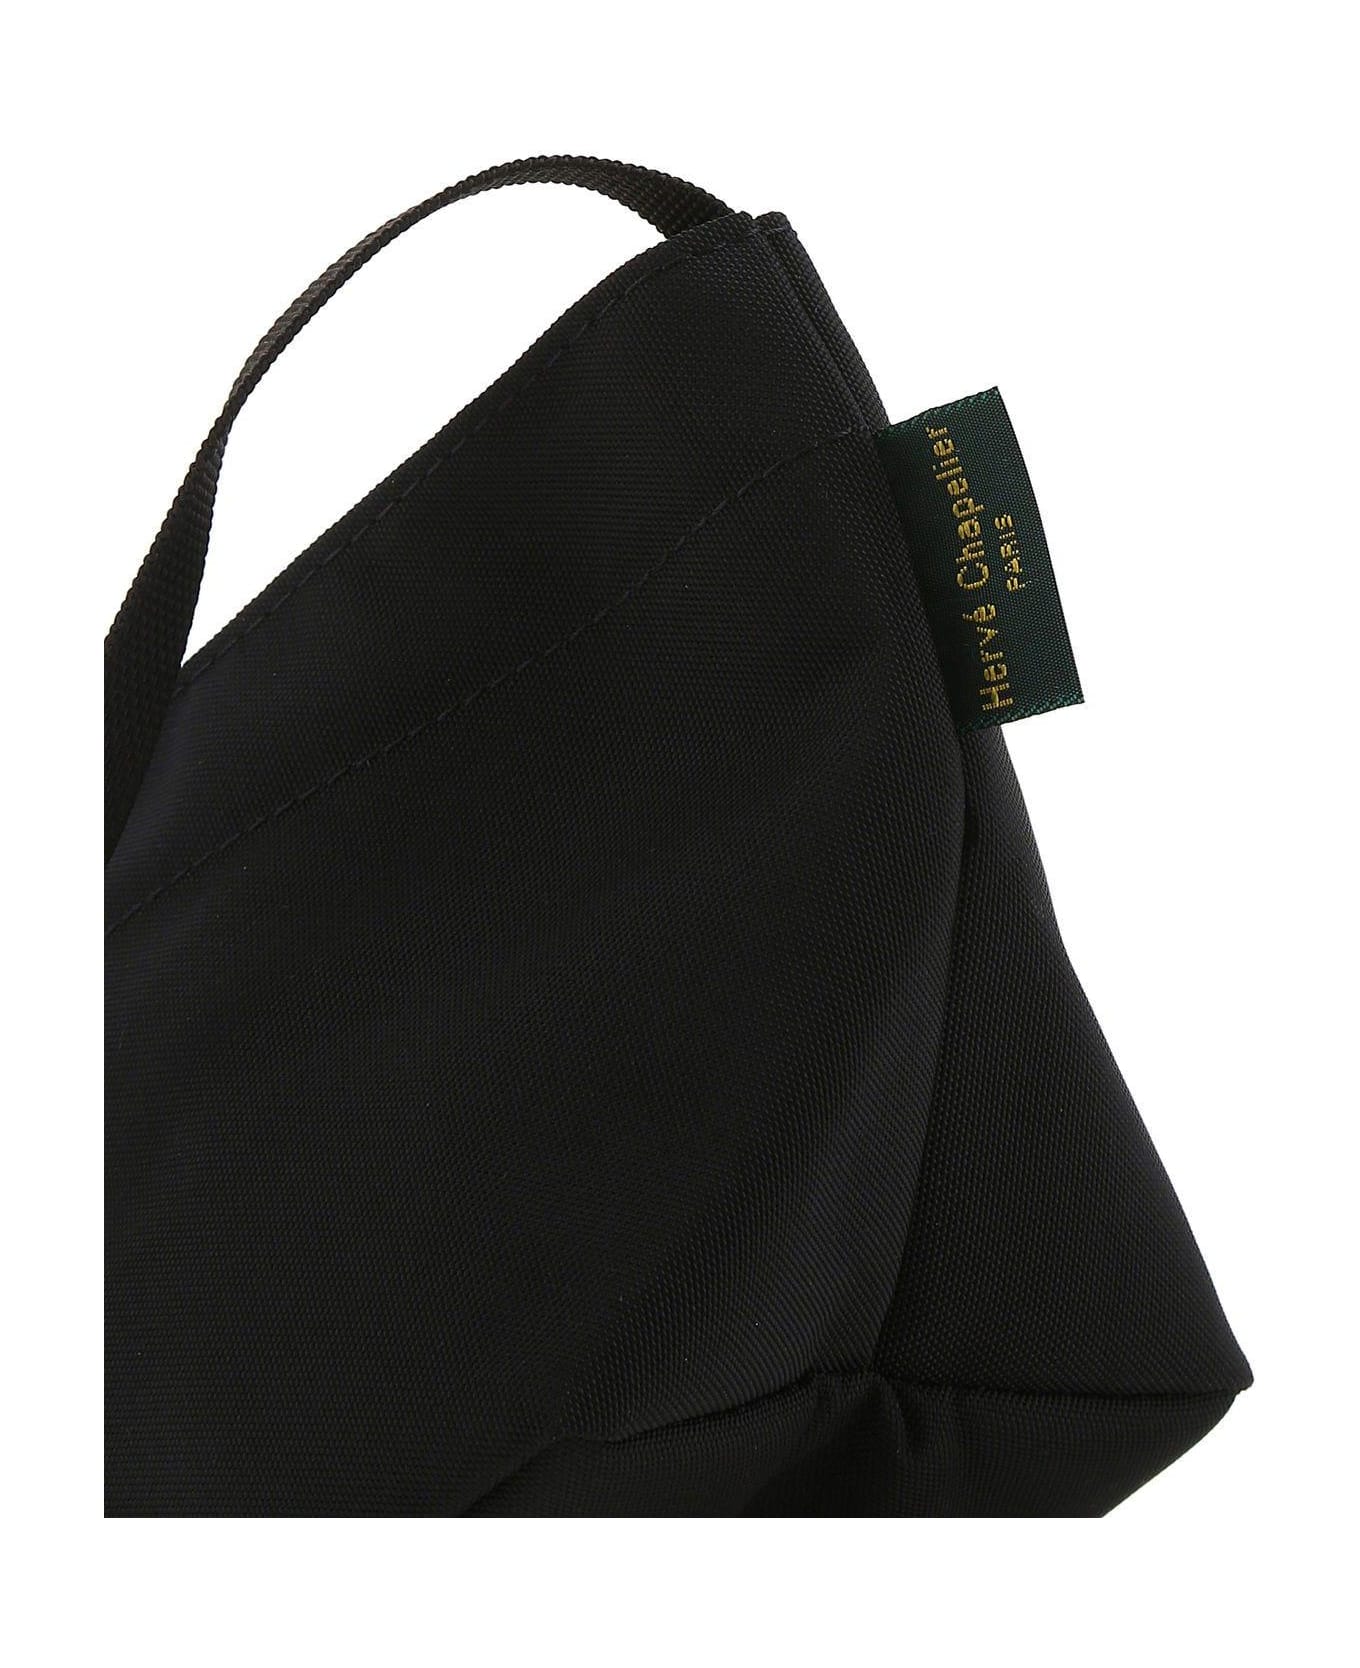 Hervè Chapelier Black Canvas Crossbody Bag - BLACK